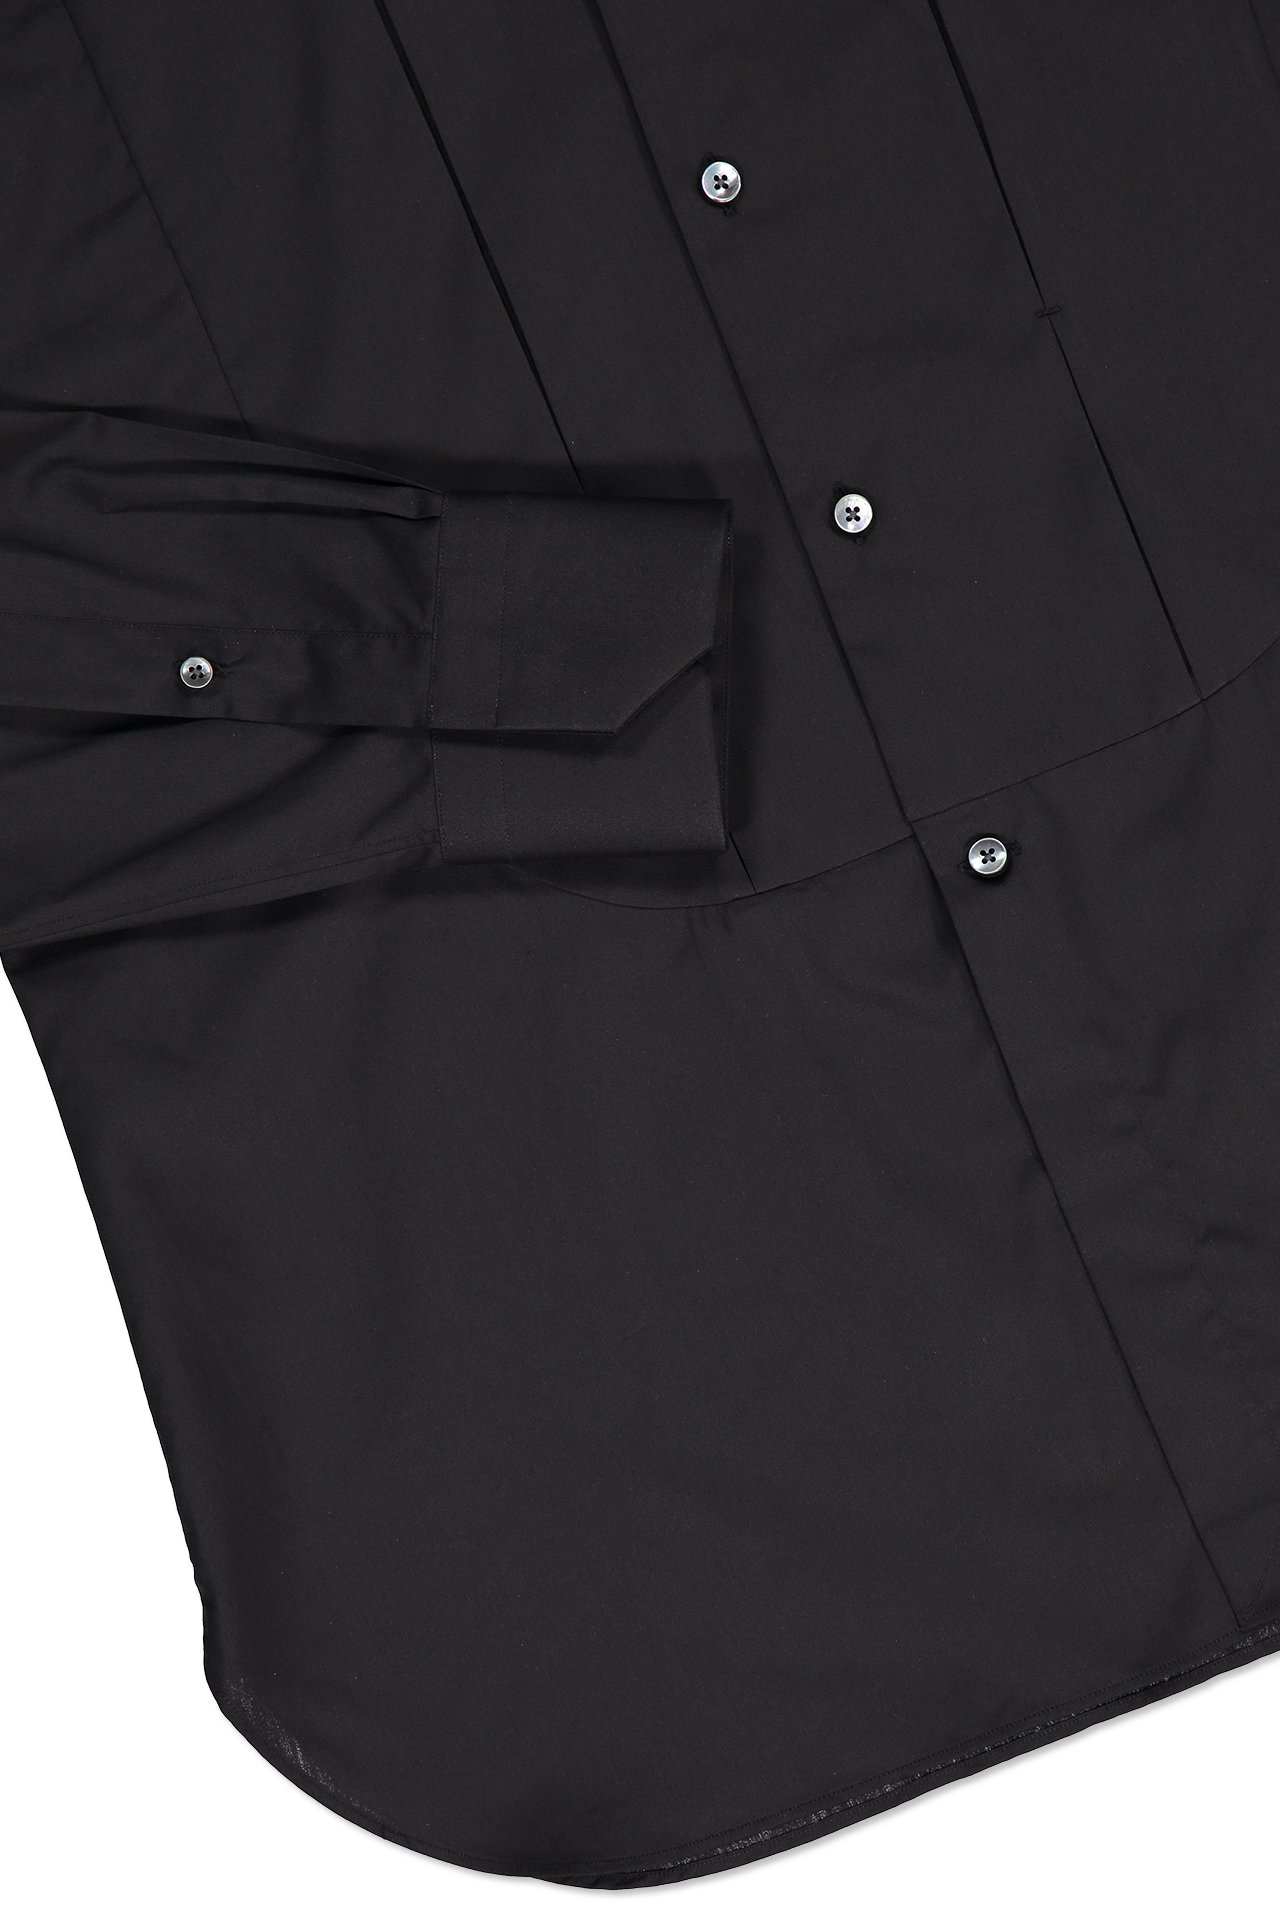 Long Sleeve Dress Shirt Pleat Black (1536575176819)